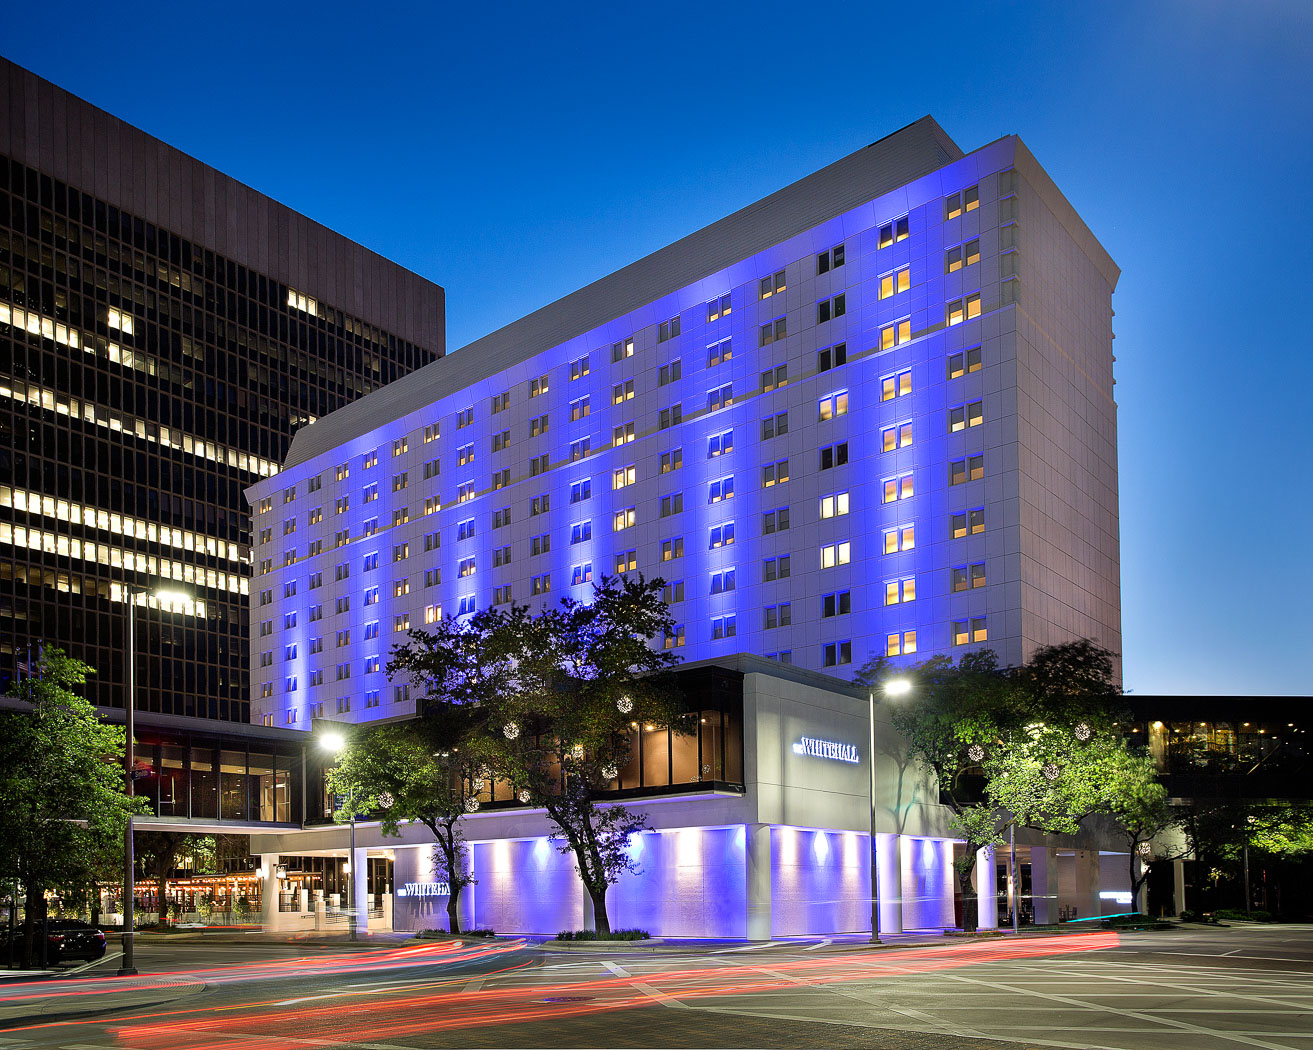 Hotels Near 713 Music Hall Houston Texas - hotels near ace